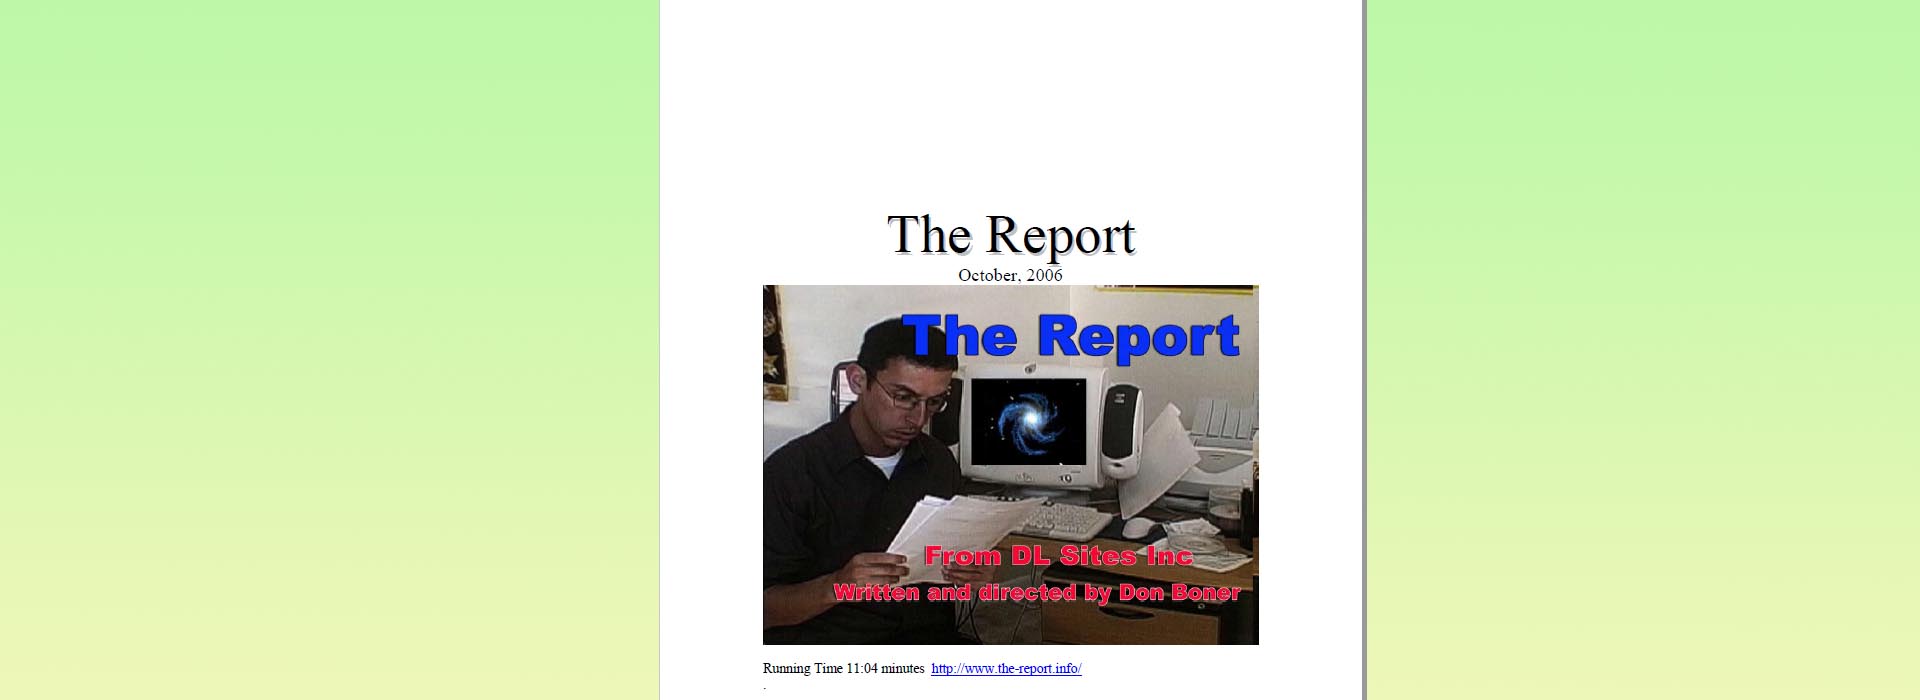 The Report Presskit